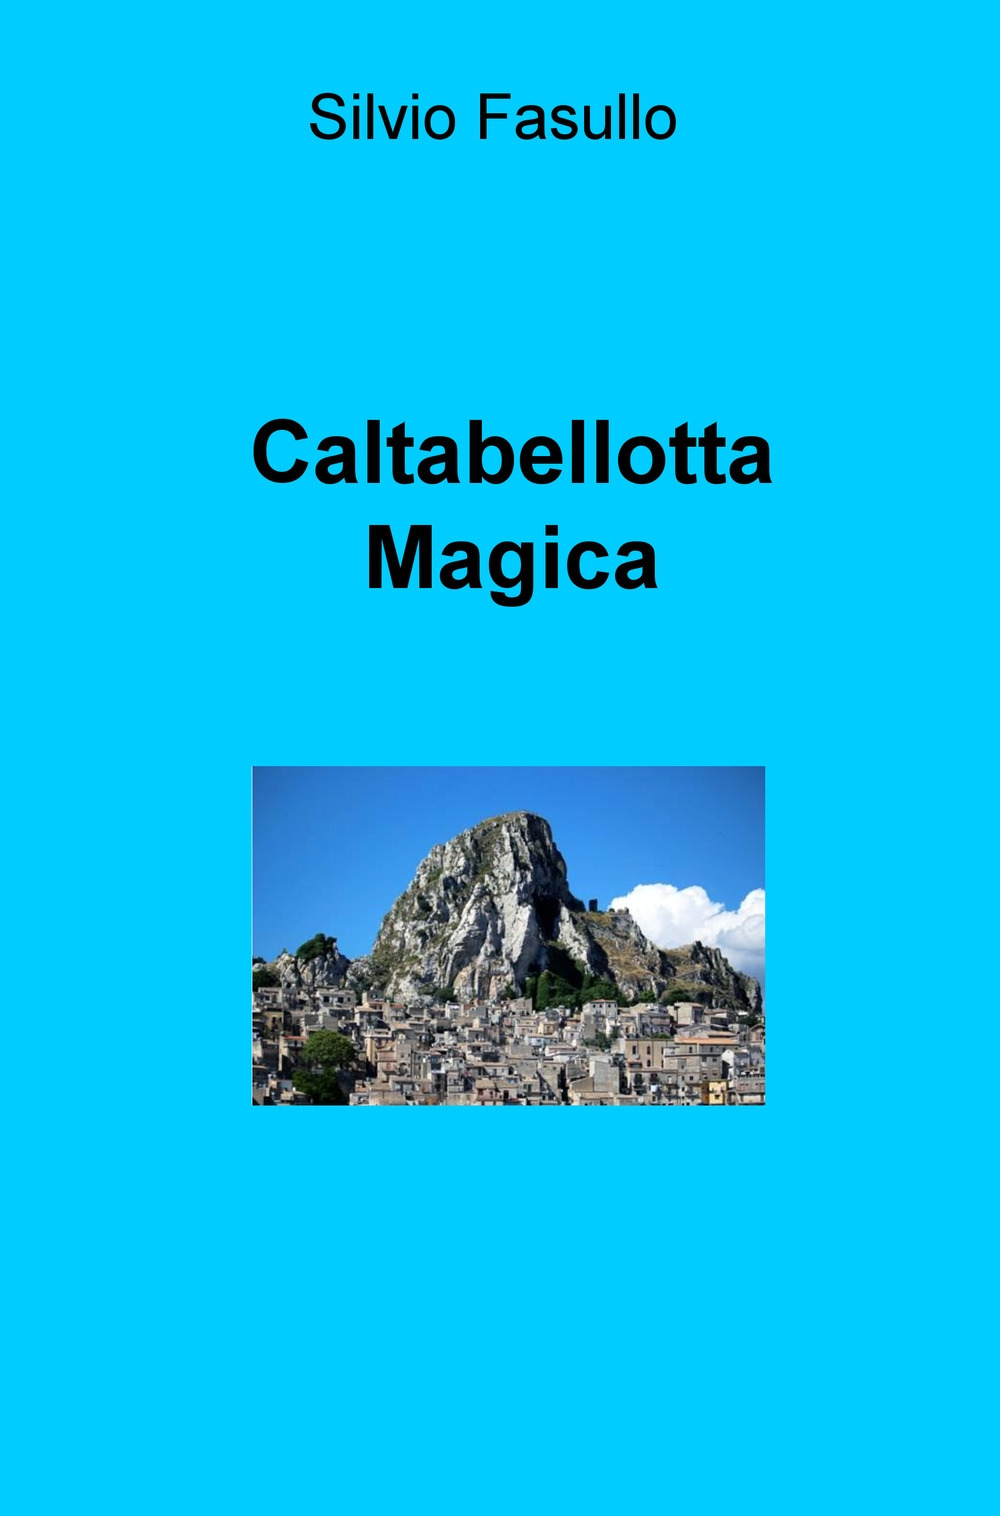 Caltabellotta magica